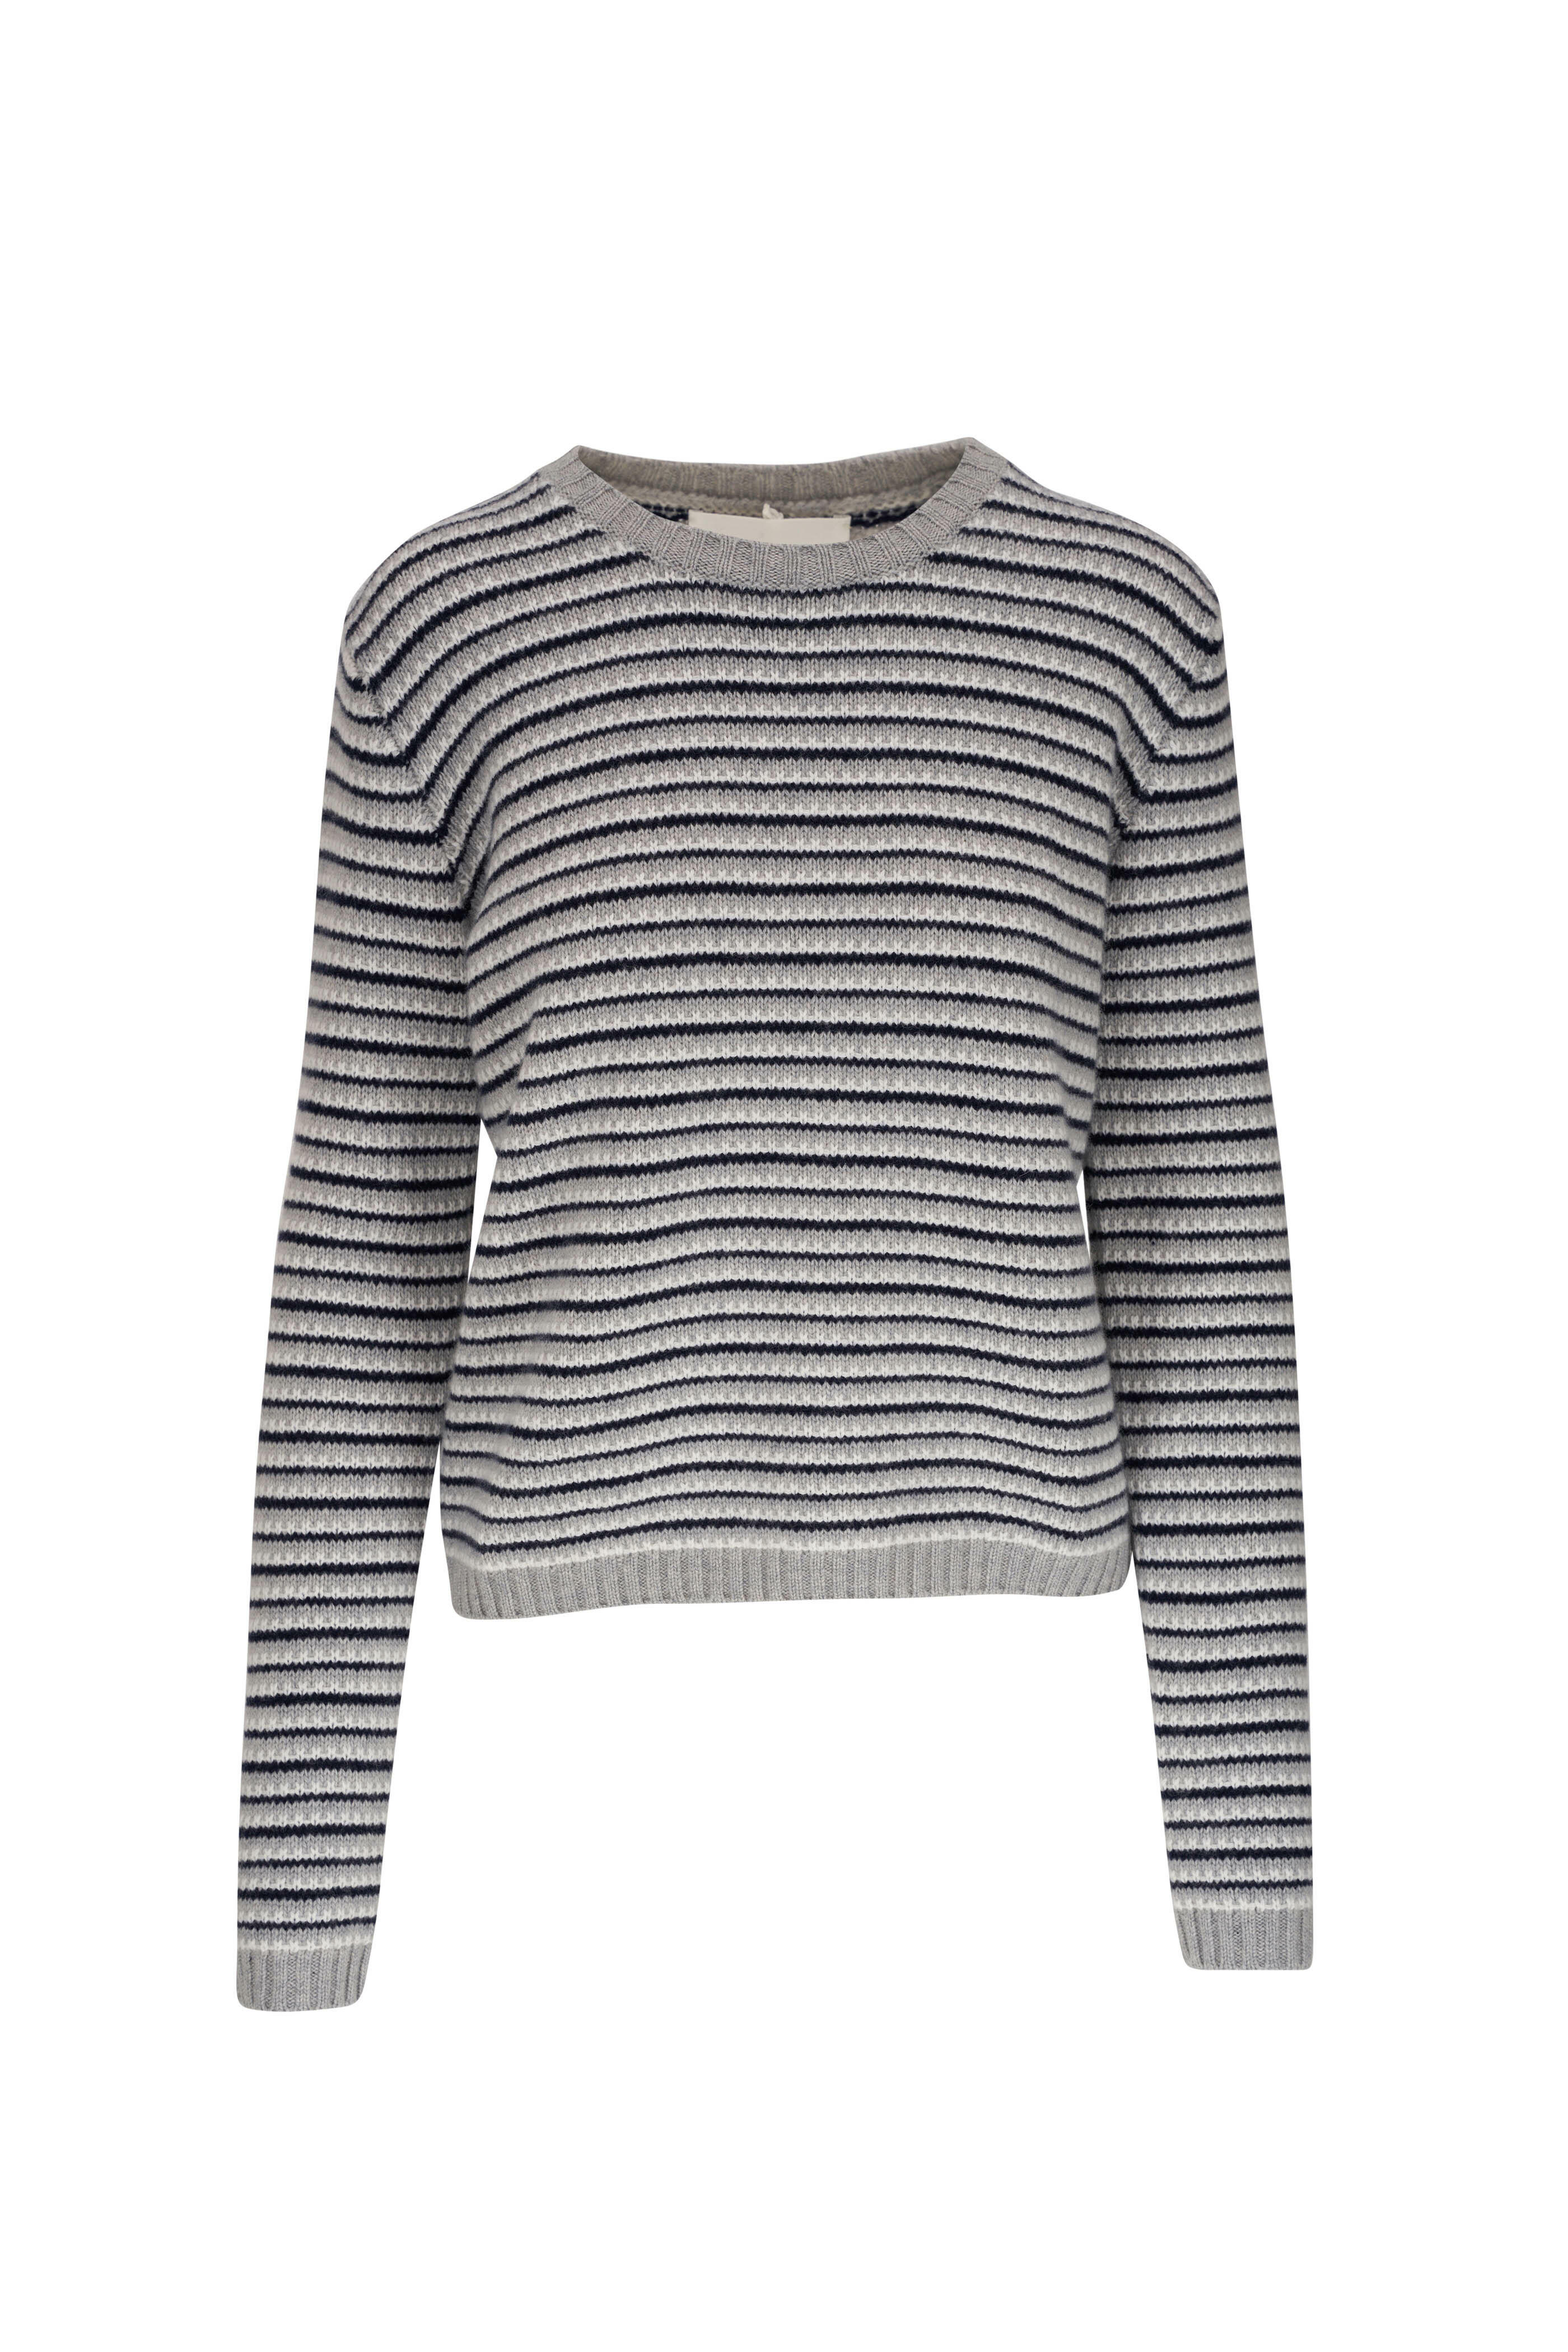 Lisa Yang - Mable Dove Stripe Cashmere Crewneck Sweater